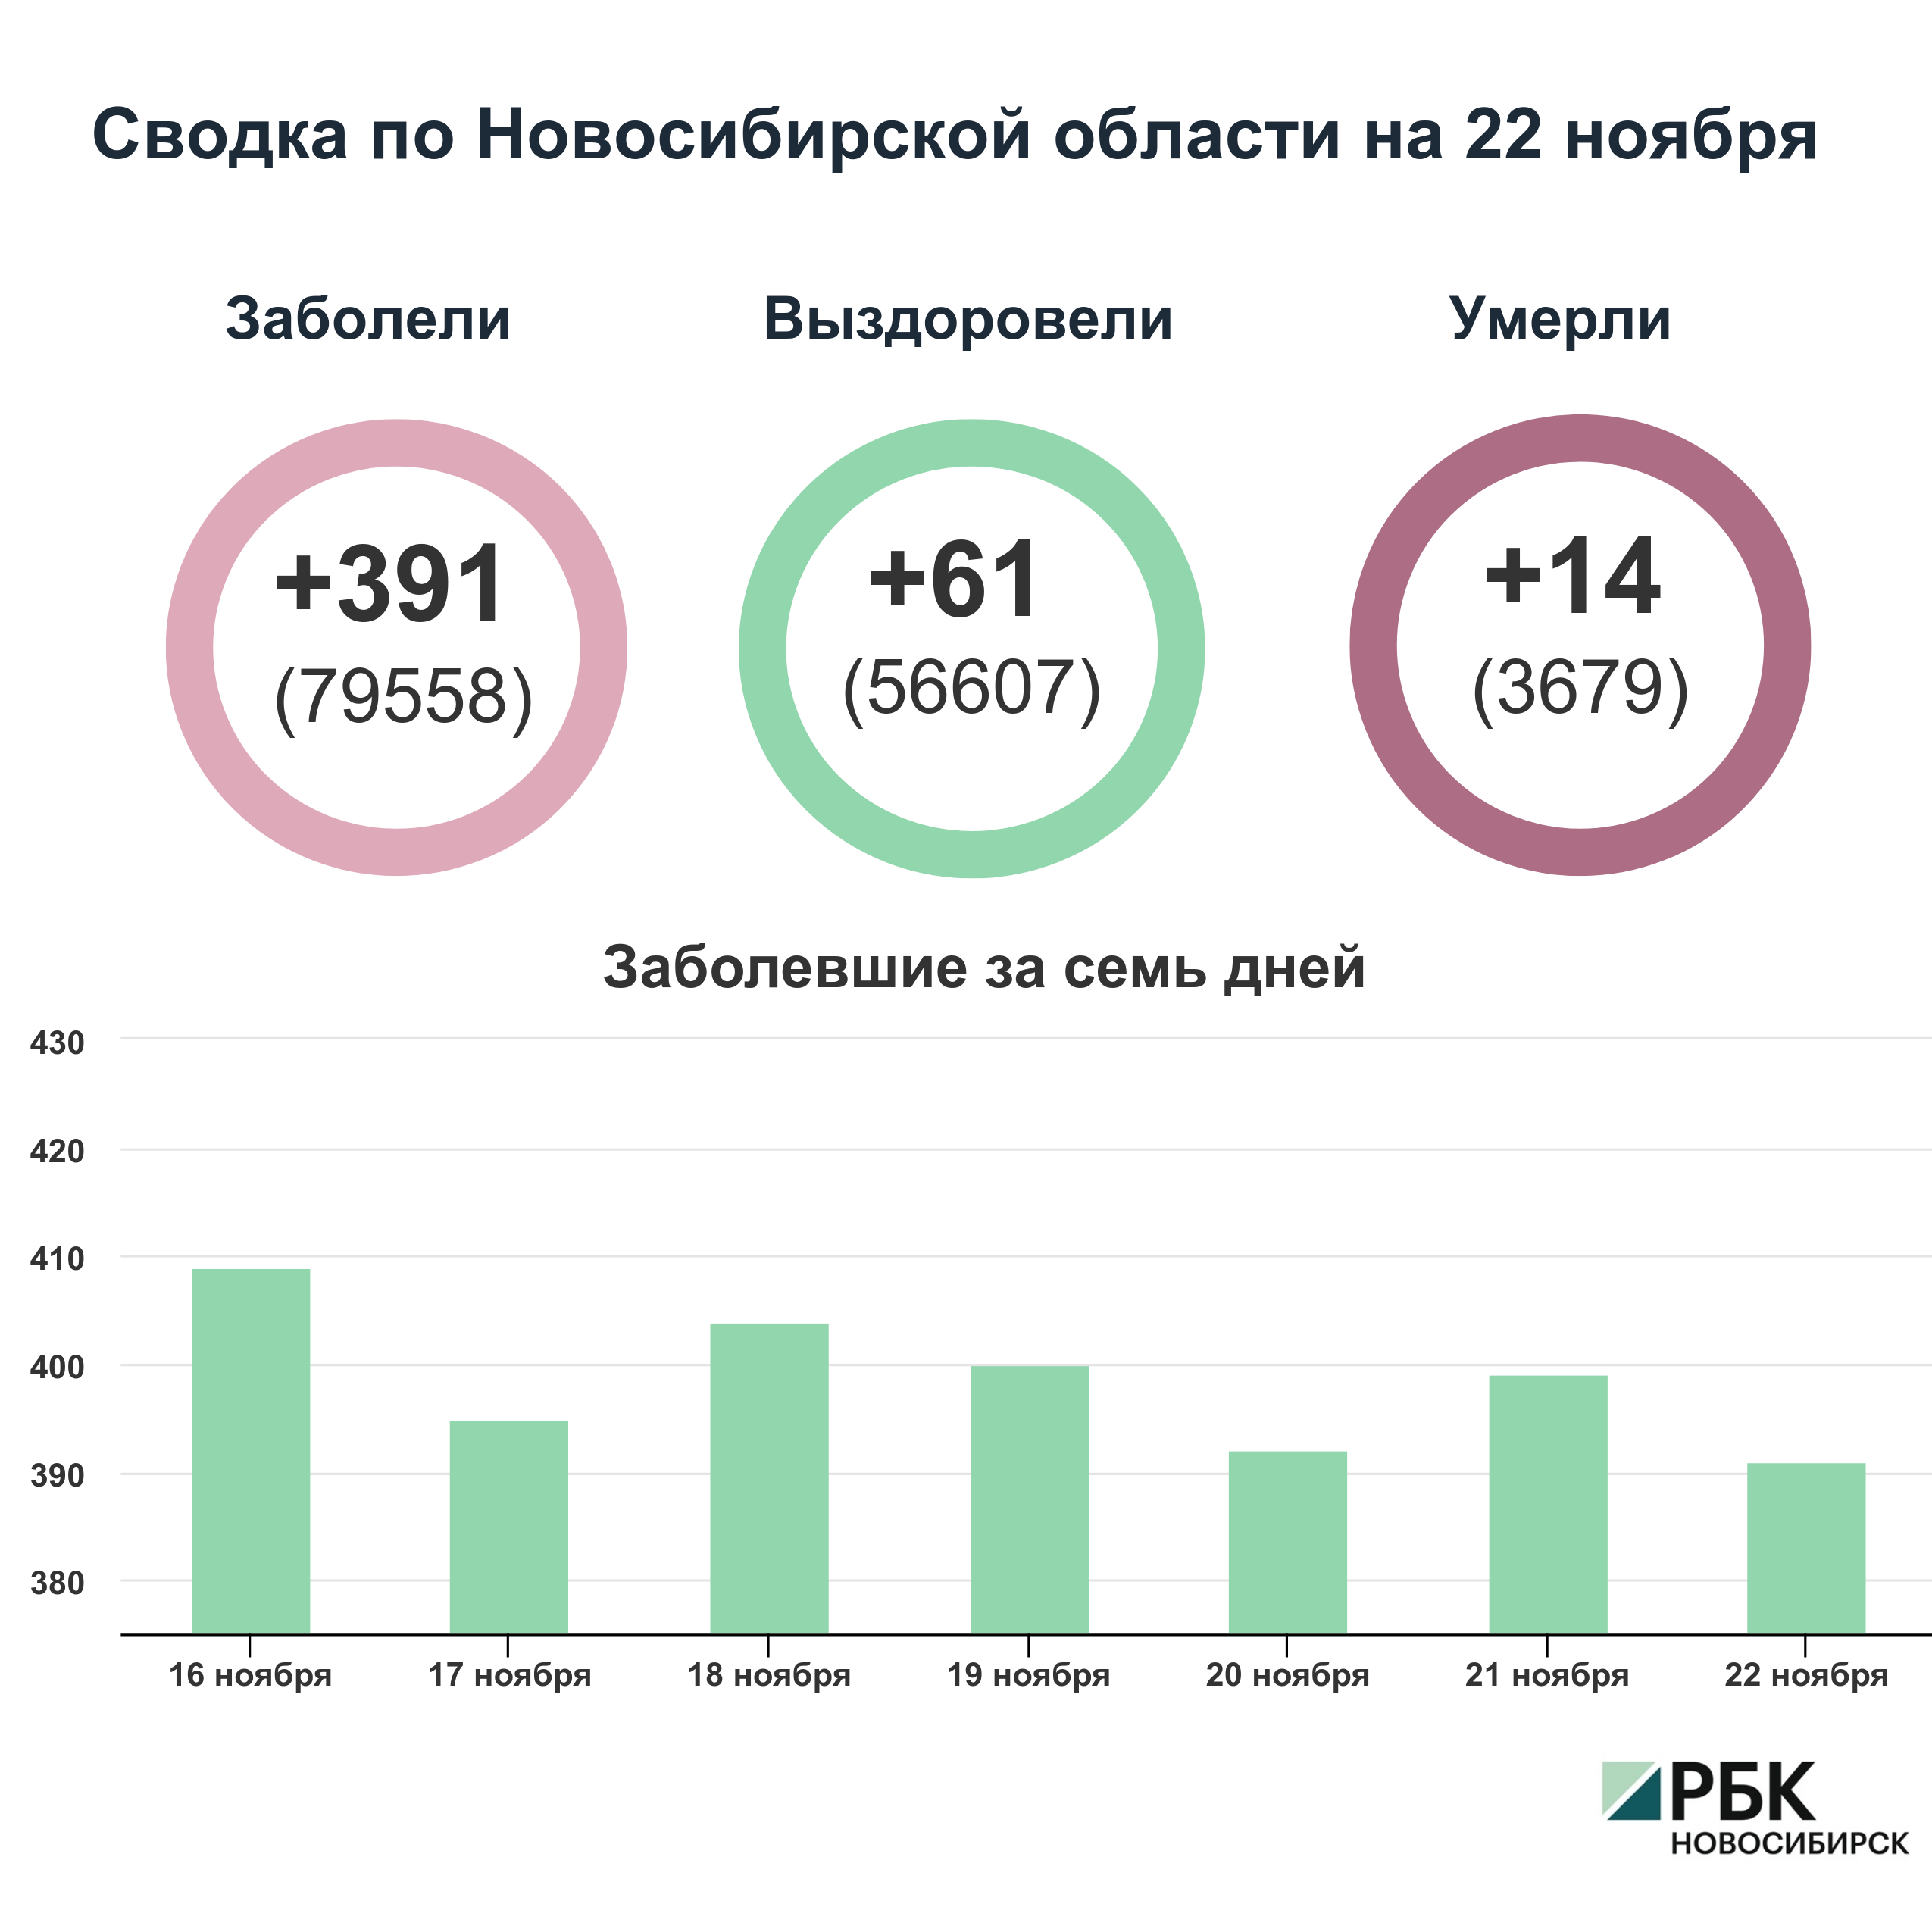 Коронавирус в Новосибирске: сводка на 22 ноября